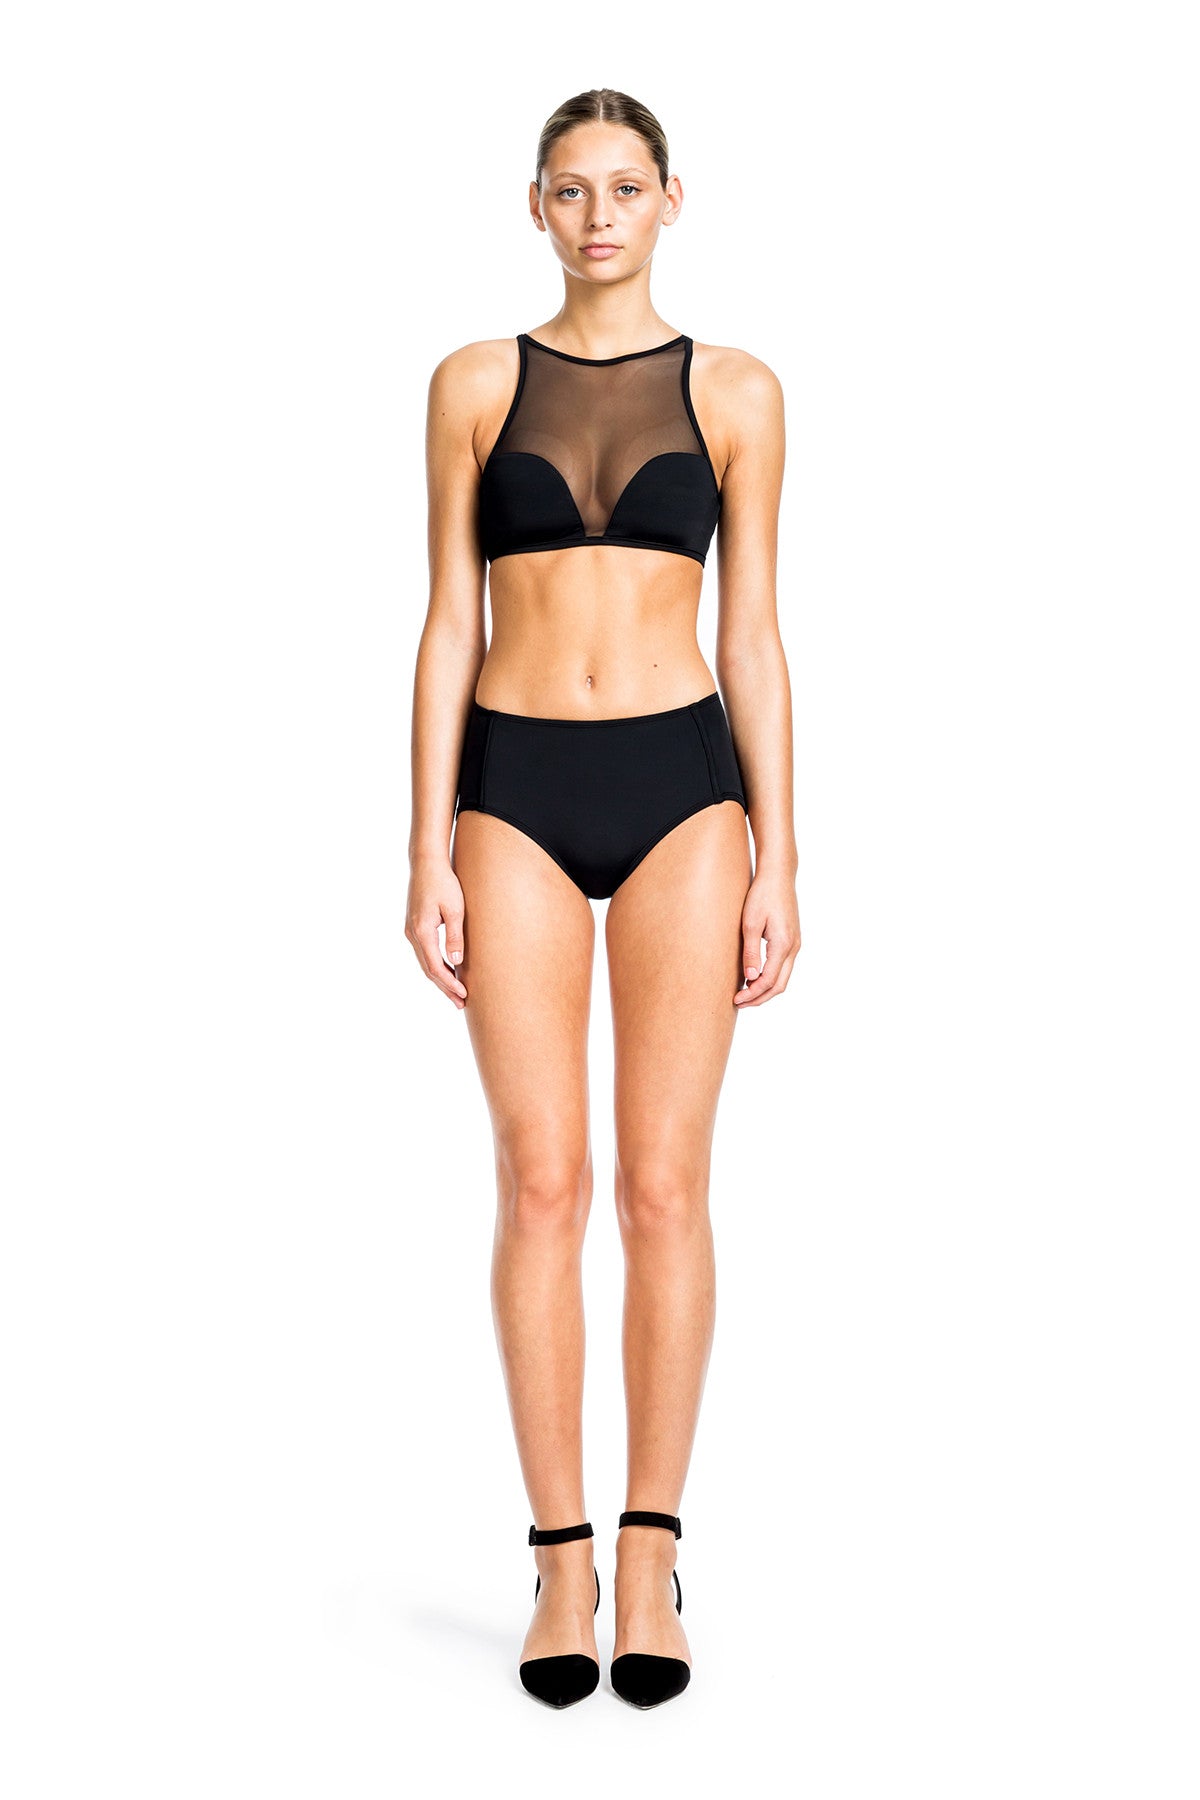 Beth Richards - Faye Halter Mesh Swim Bra Top Black Bikini – BETH RICHARDS